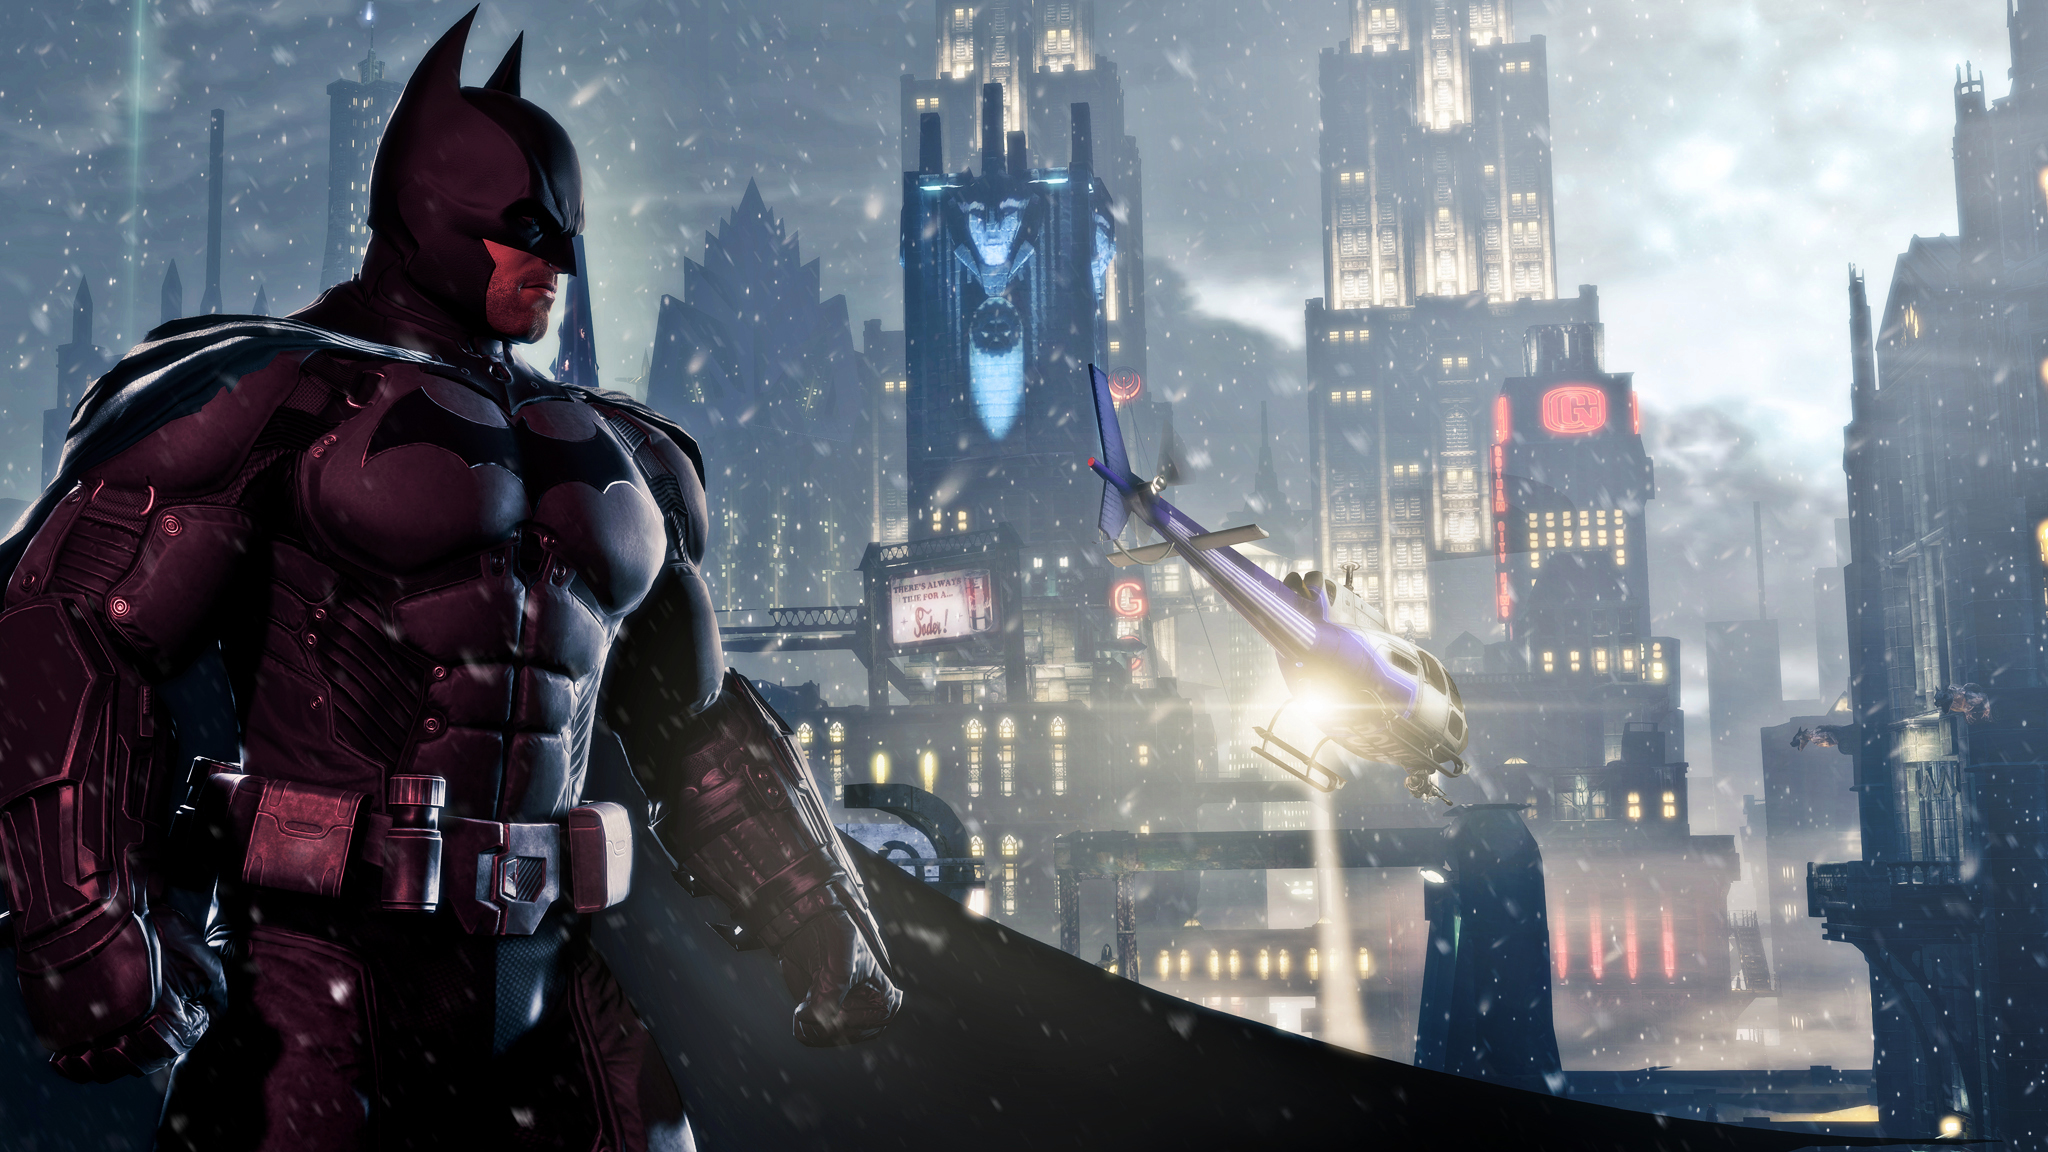 Batman: Arkham Asylum - Full Game Walkthrough in 4K on Make a GIF